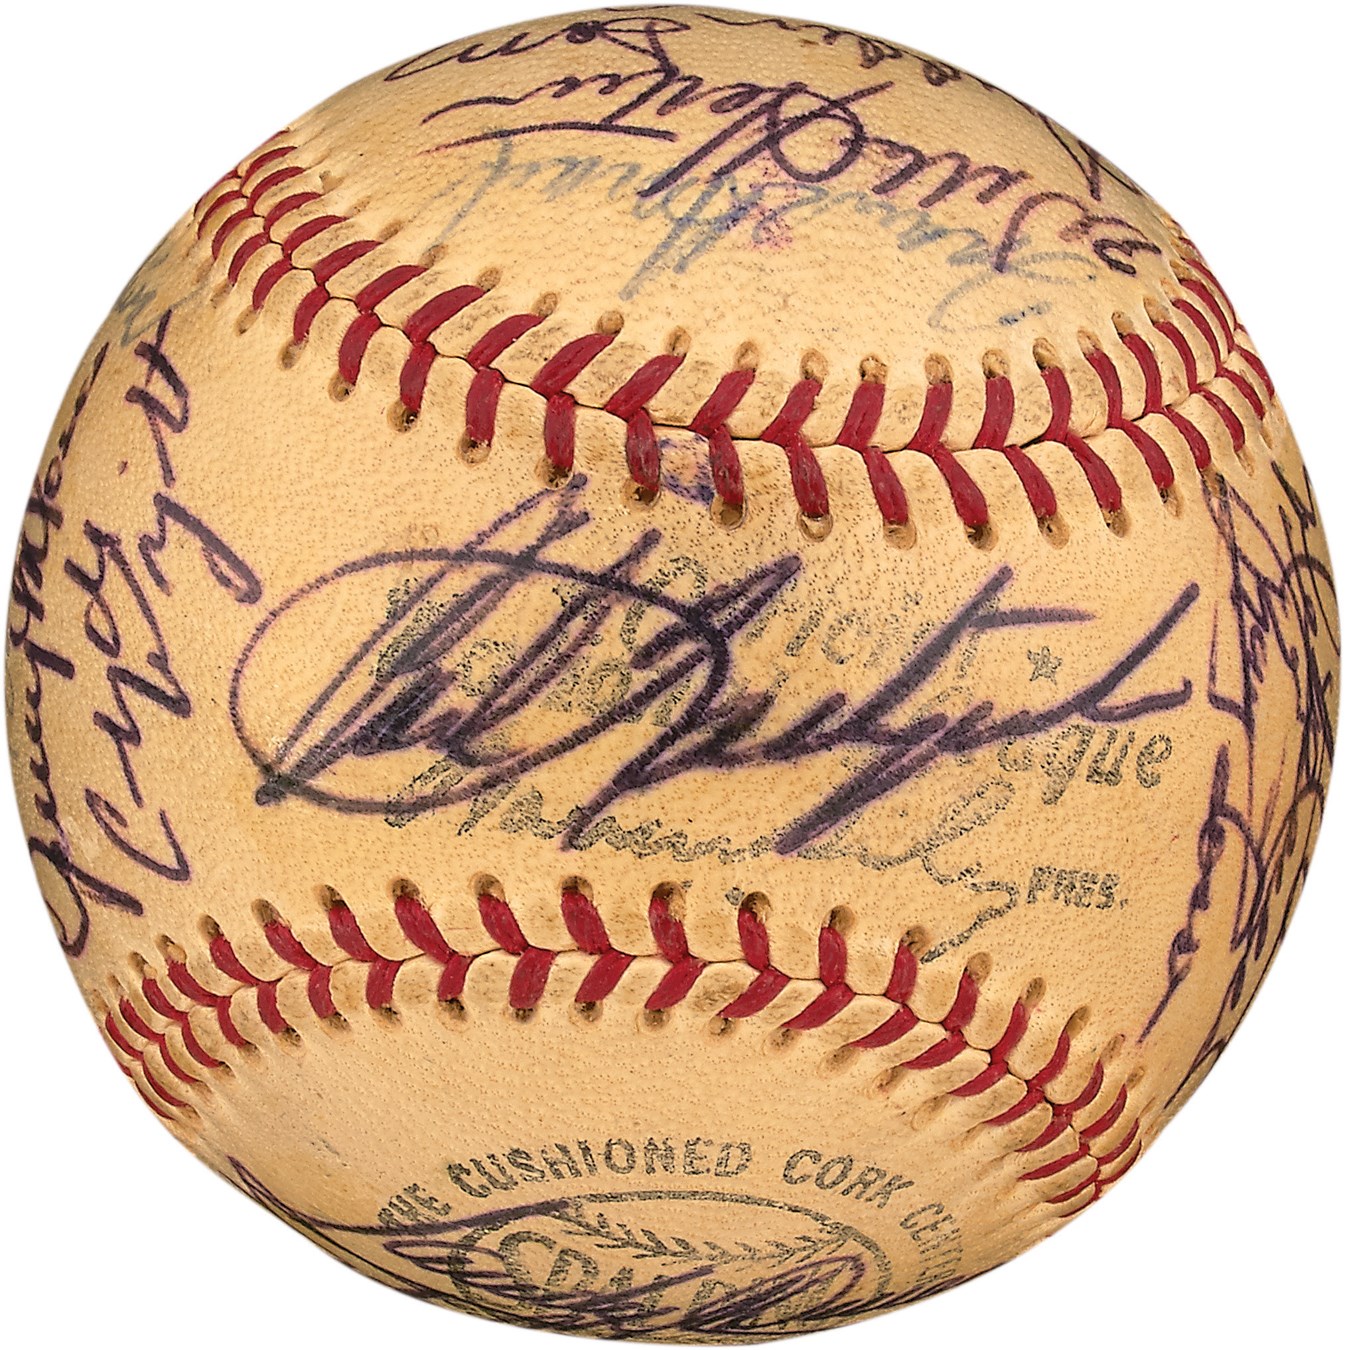 Baseball Autographs - 1970 American League All-Star Team Signed Baseball - PSA/DNA 7